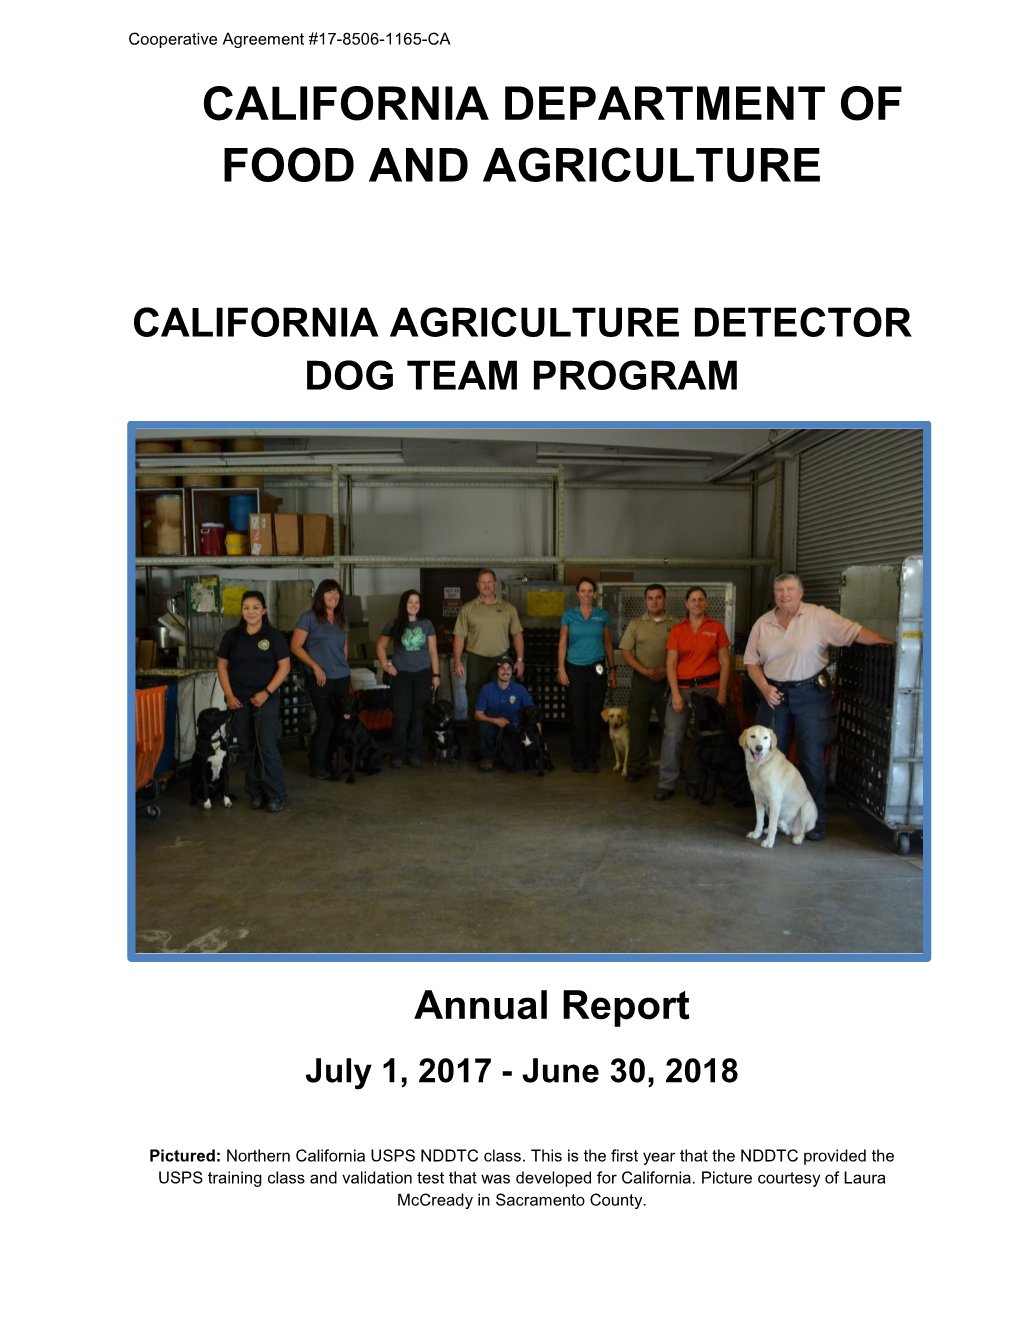 California Agriculture Detector Dog Team Program, Annual Report